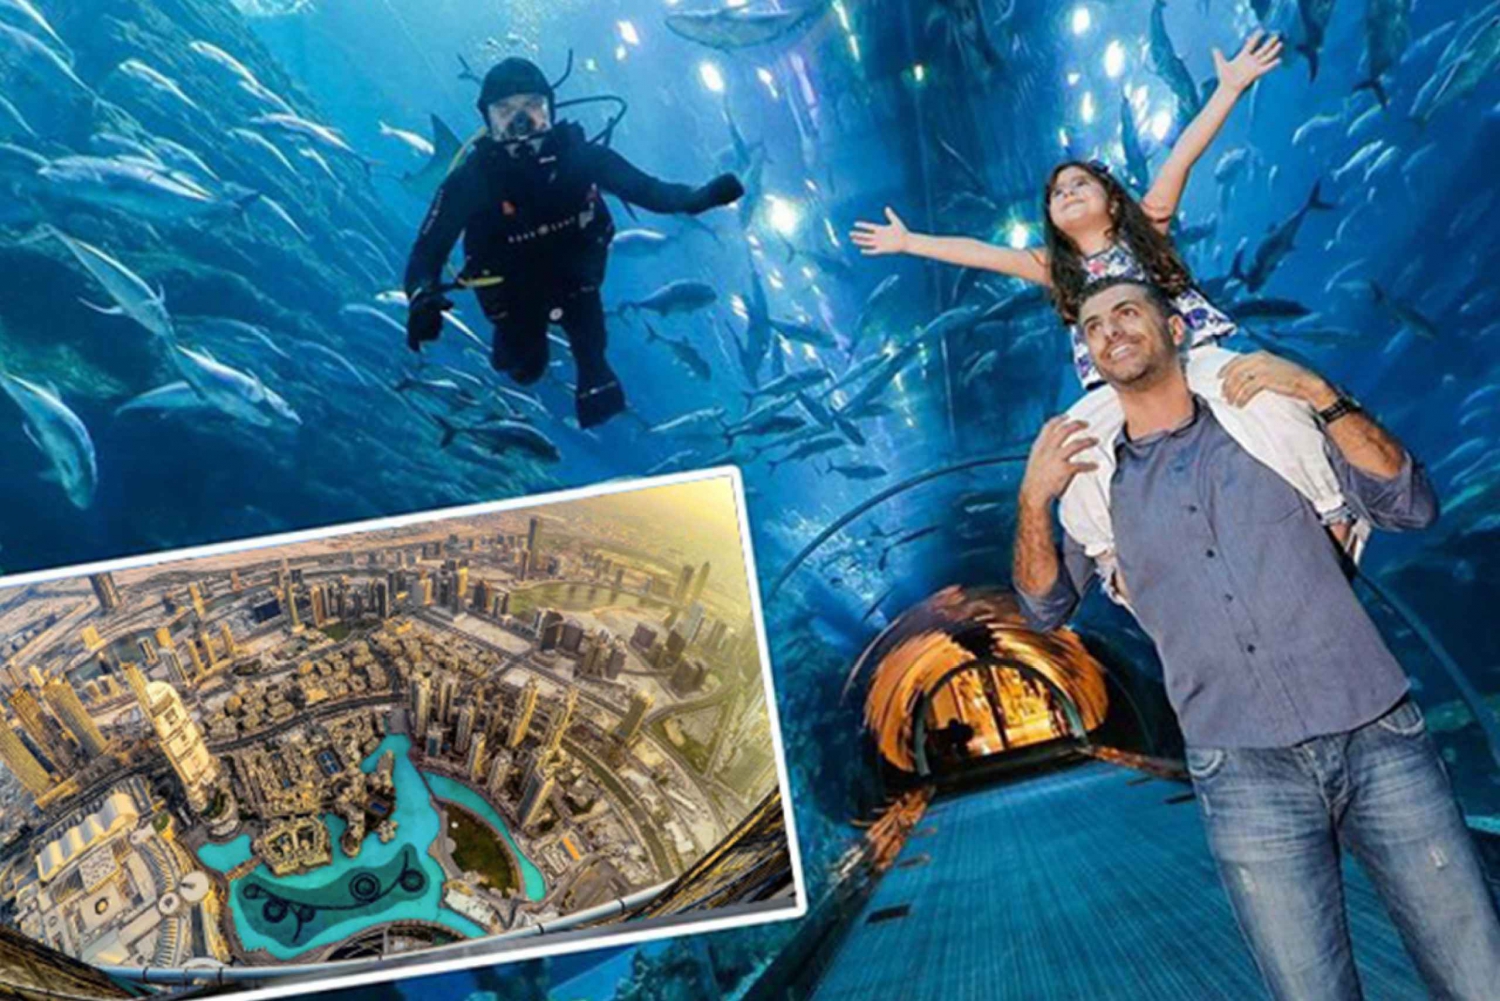 Full Day City Tour With Burj Khalifa & Underwater Zoo Ticket